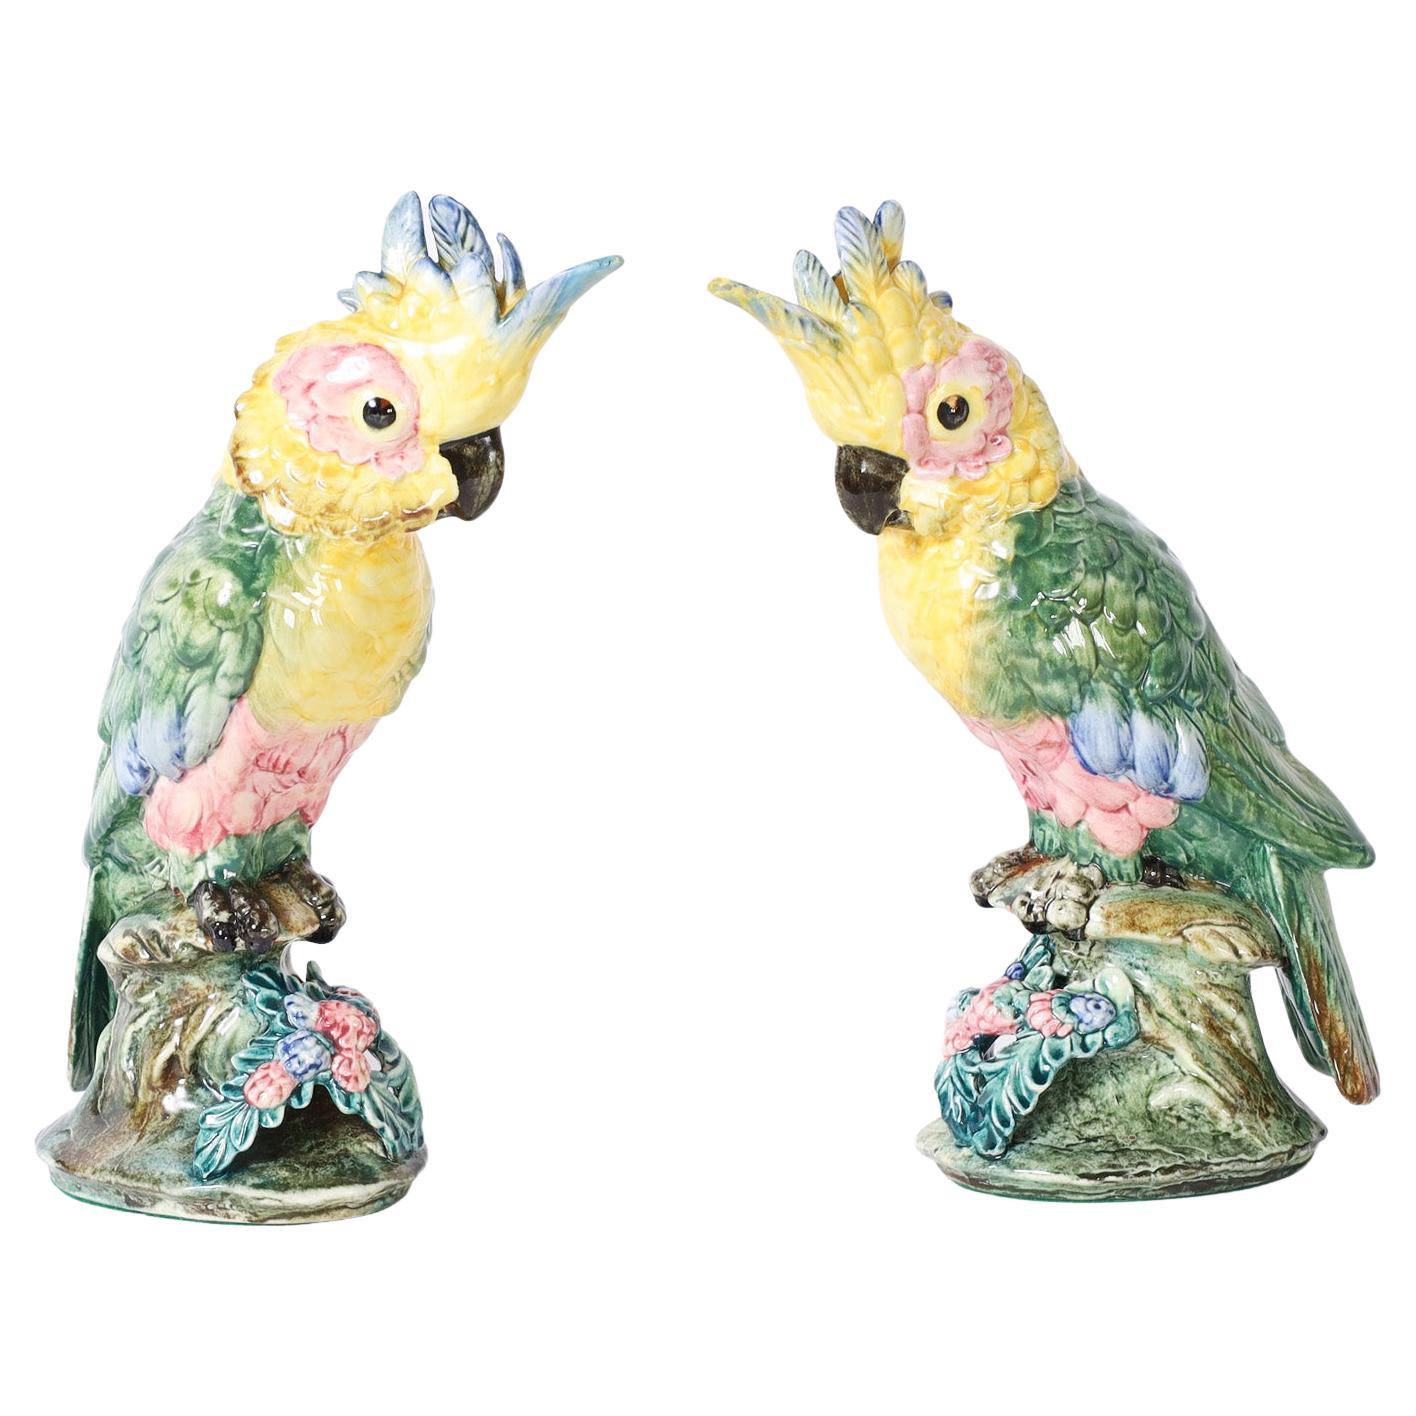 Pair of Vintage Porcelain Birds or Cockatoos by Stangl